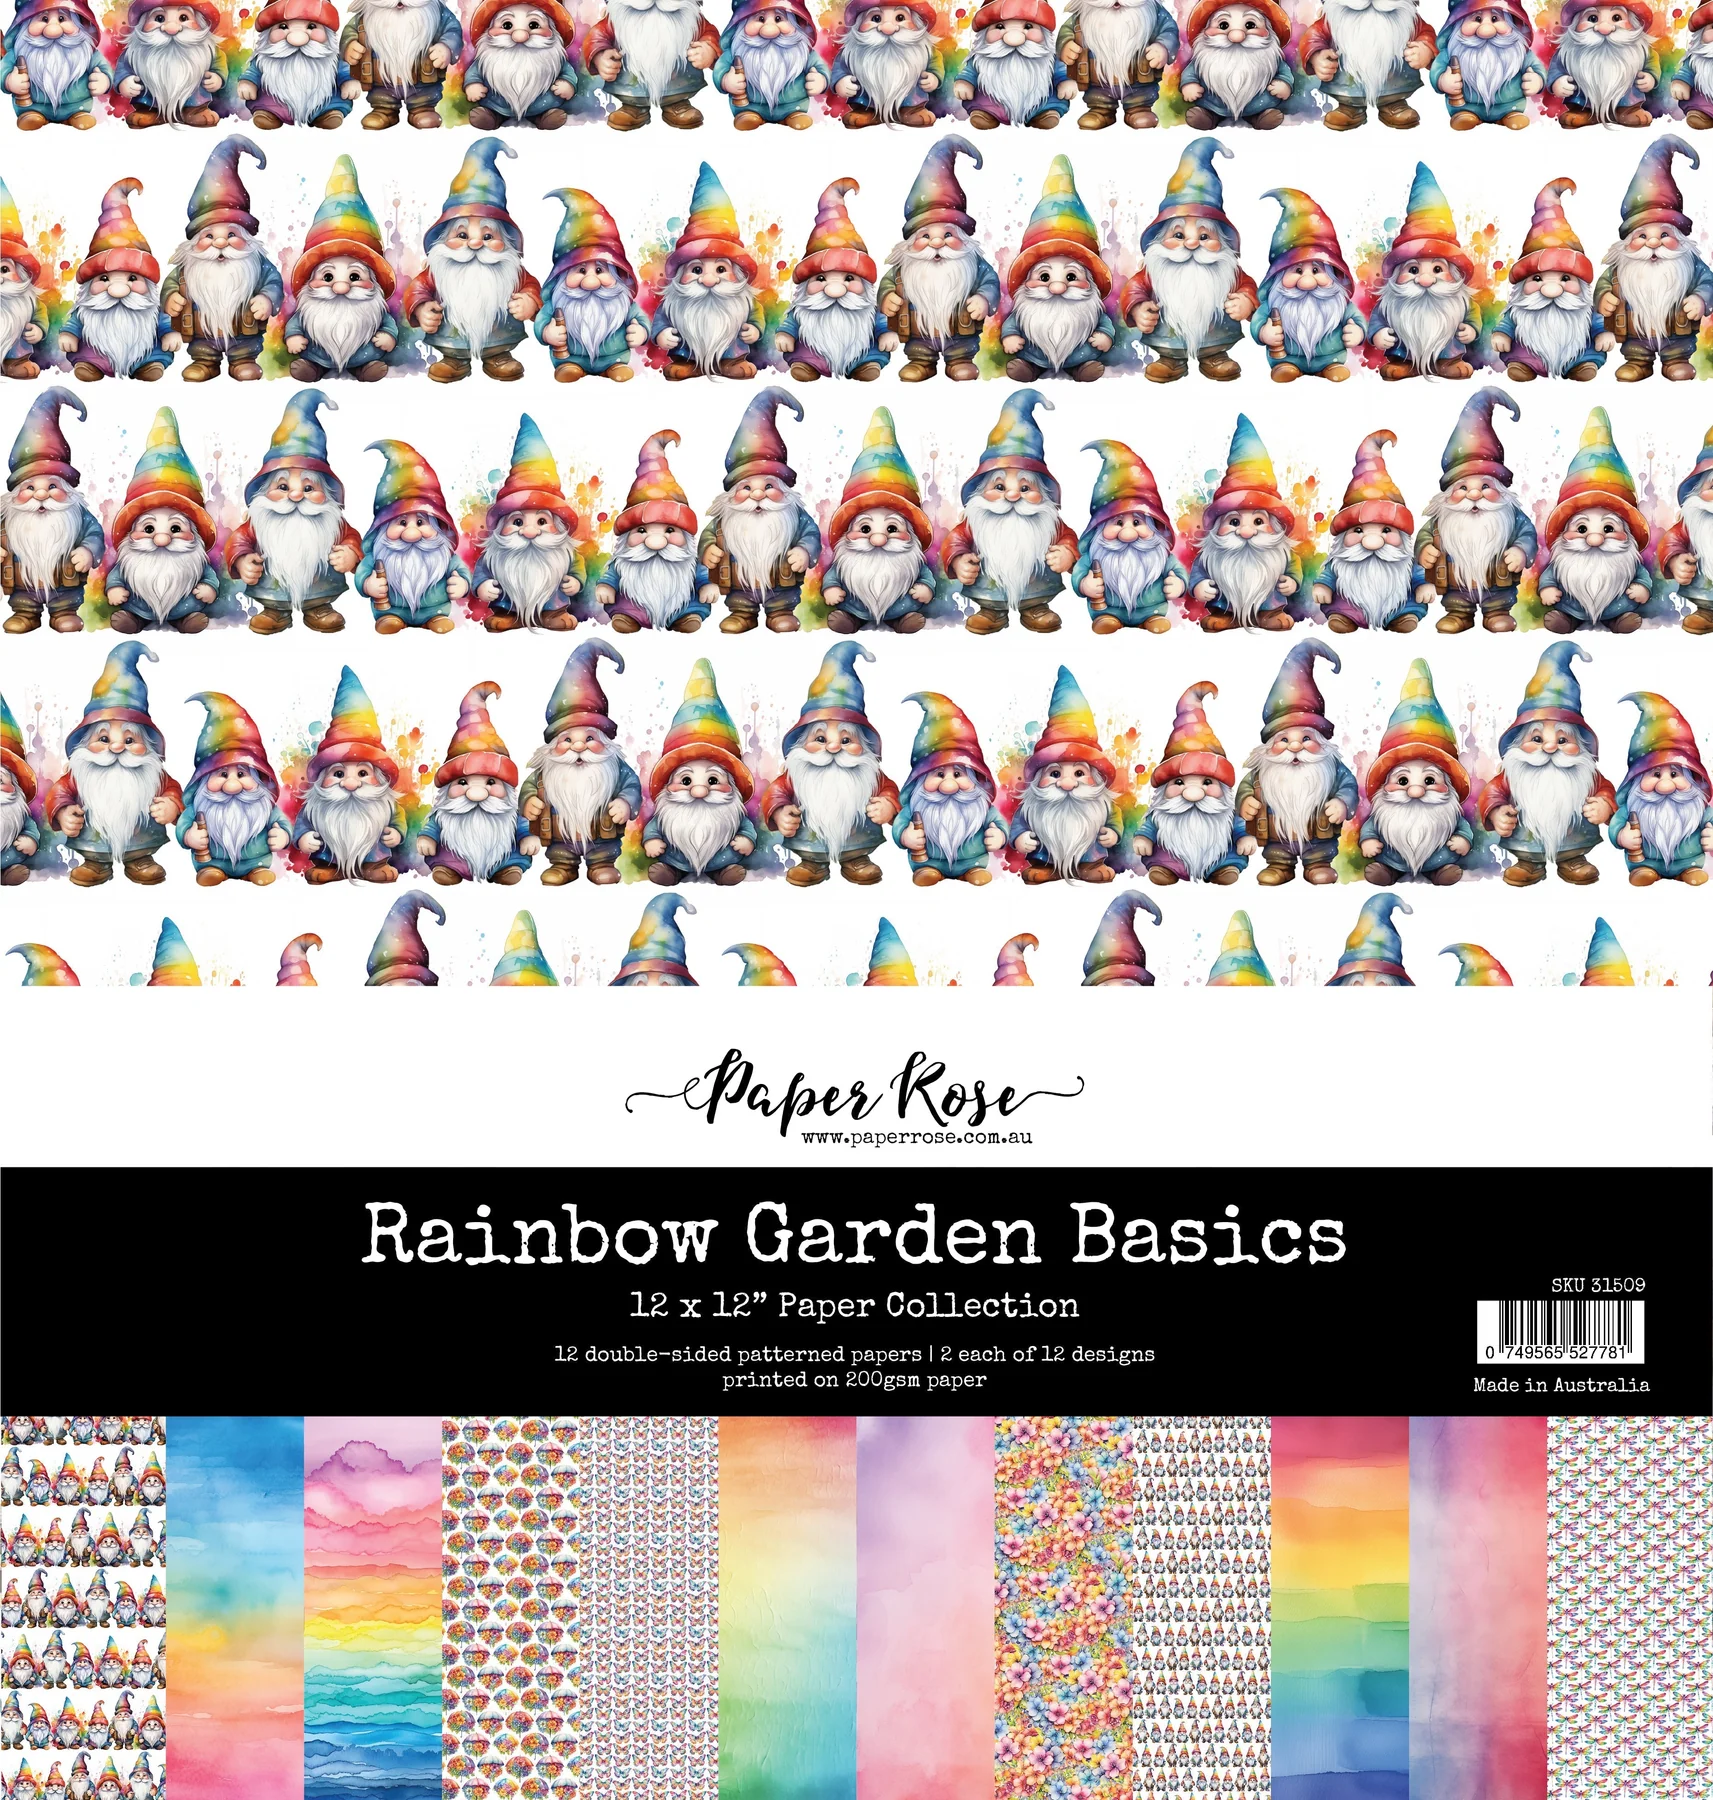 Rainbow Garden Basics 12x12 Paper Collection 31509